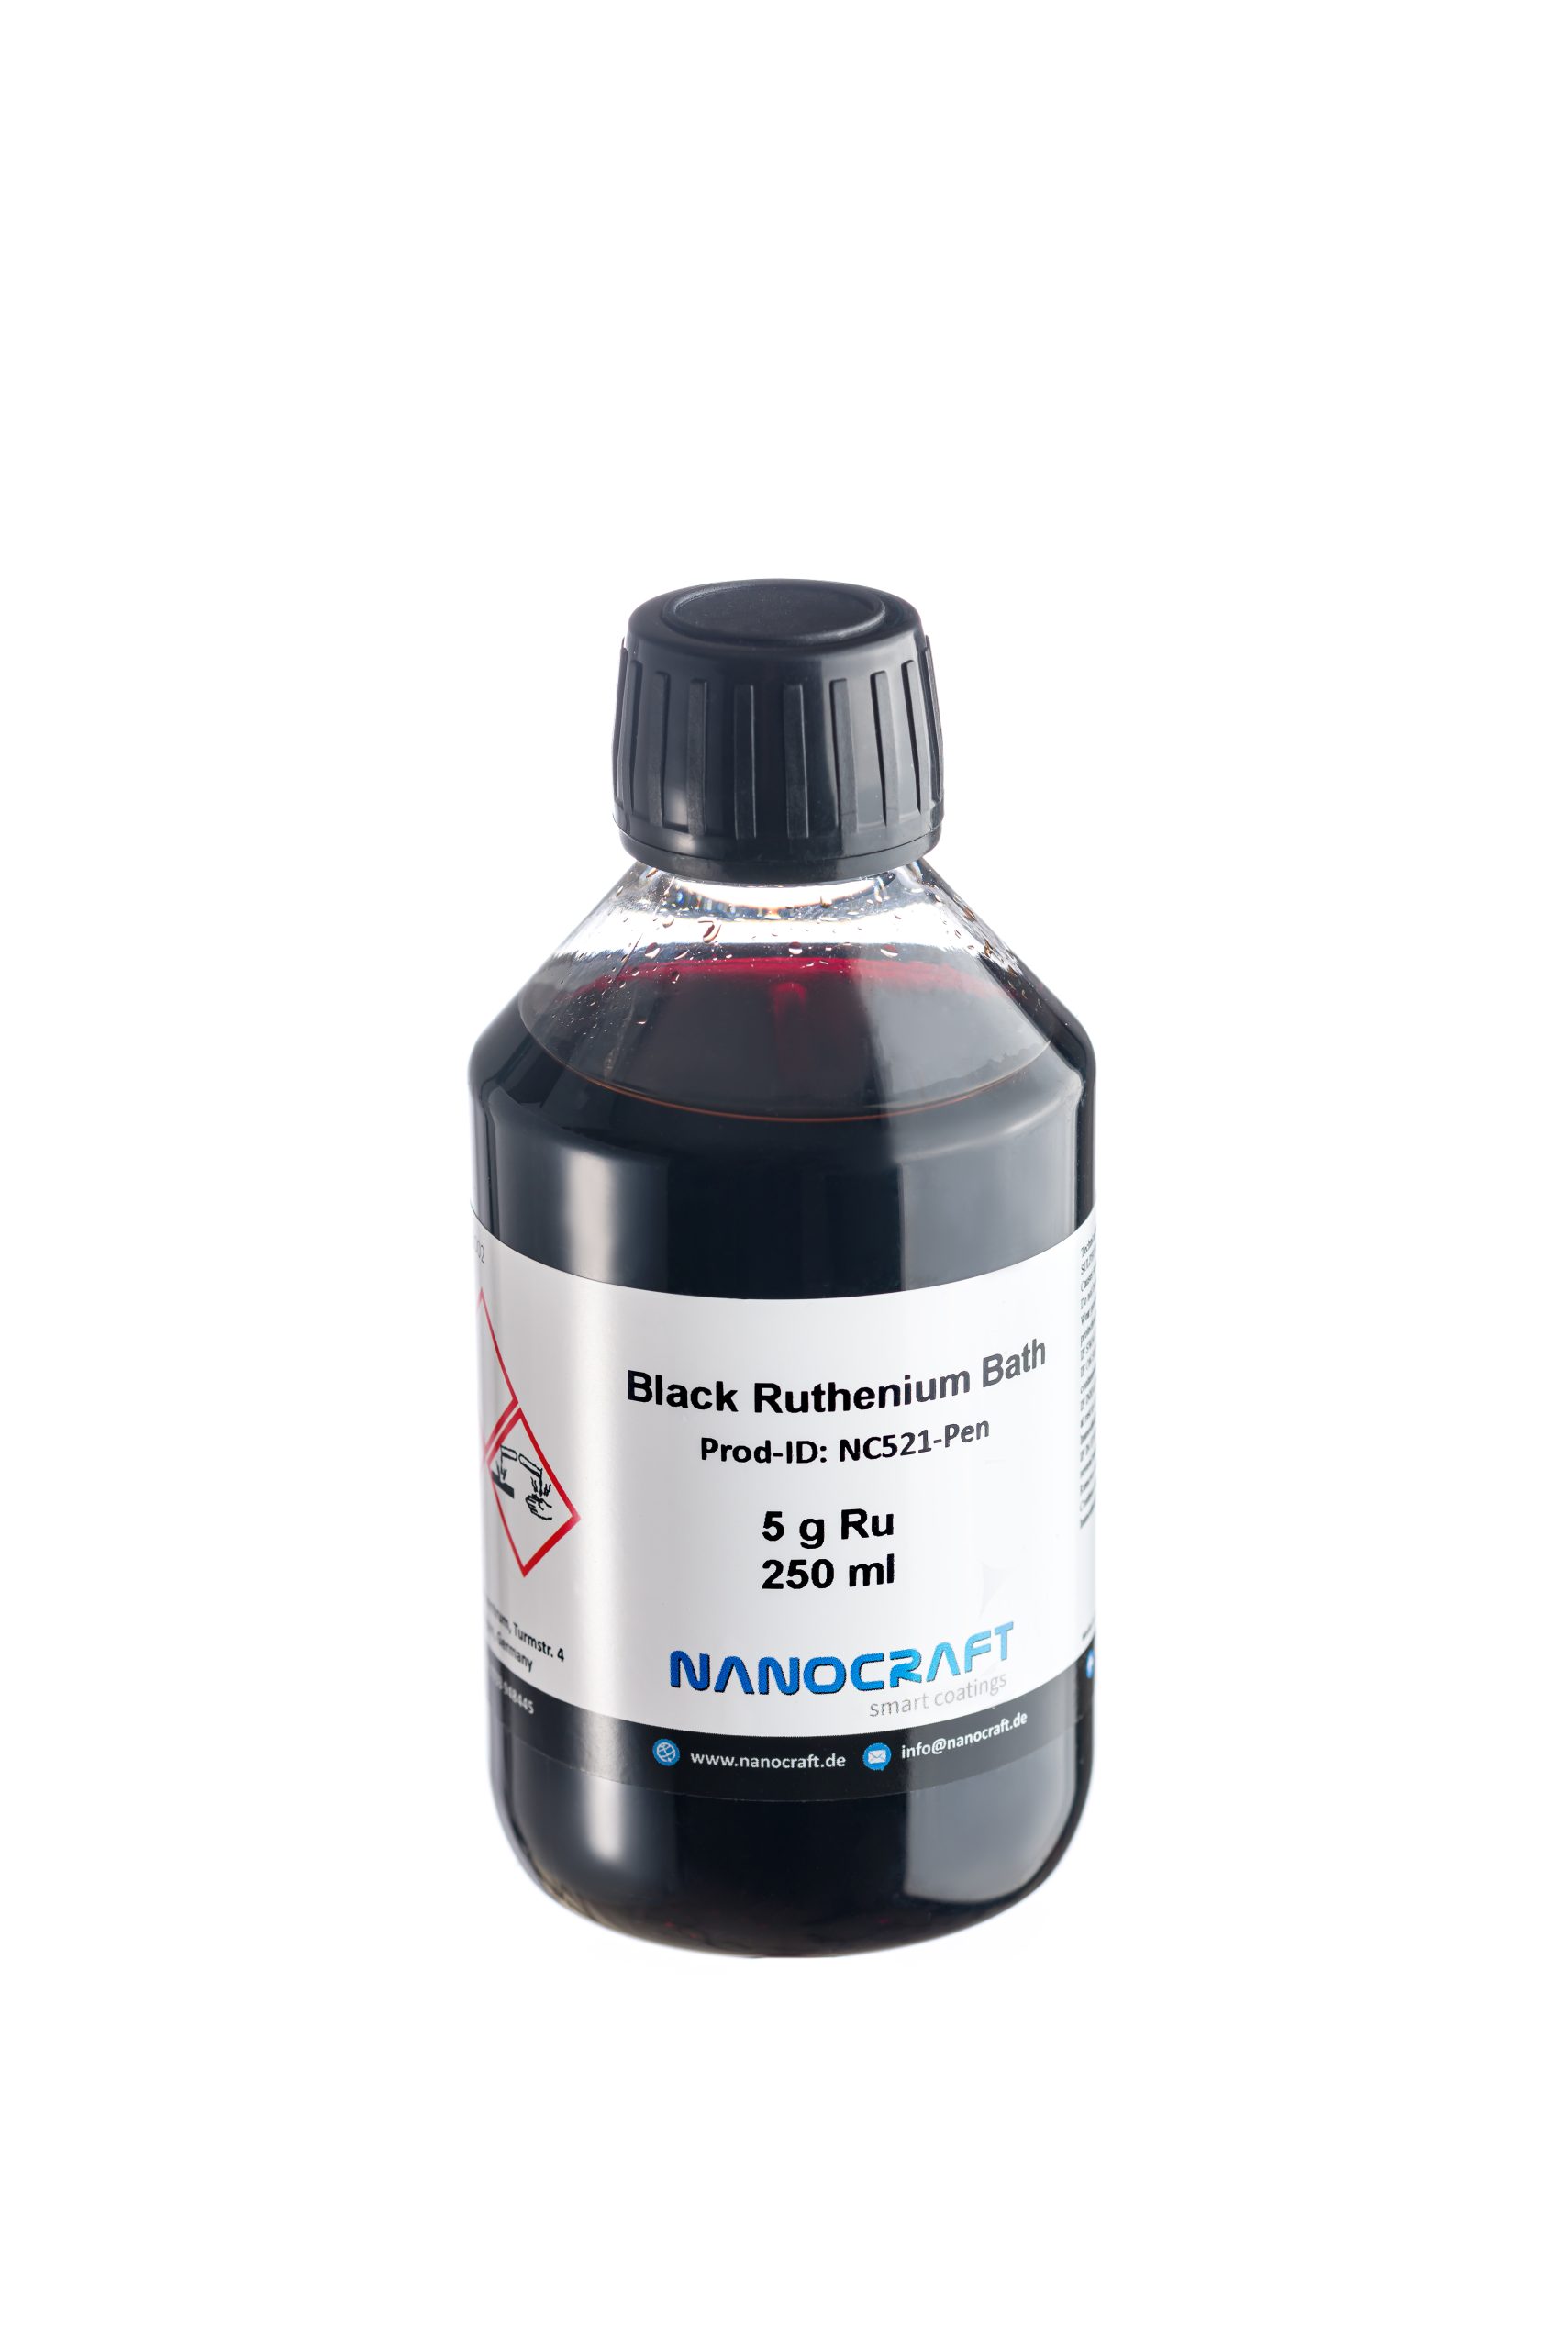 Black Ruthenium Bath Electrolyte NC521-Pen NANOCRAFT